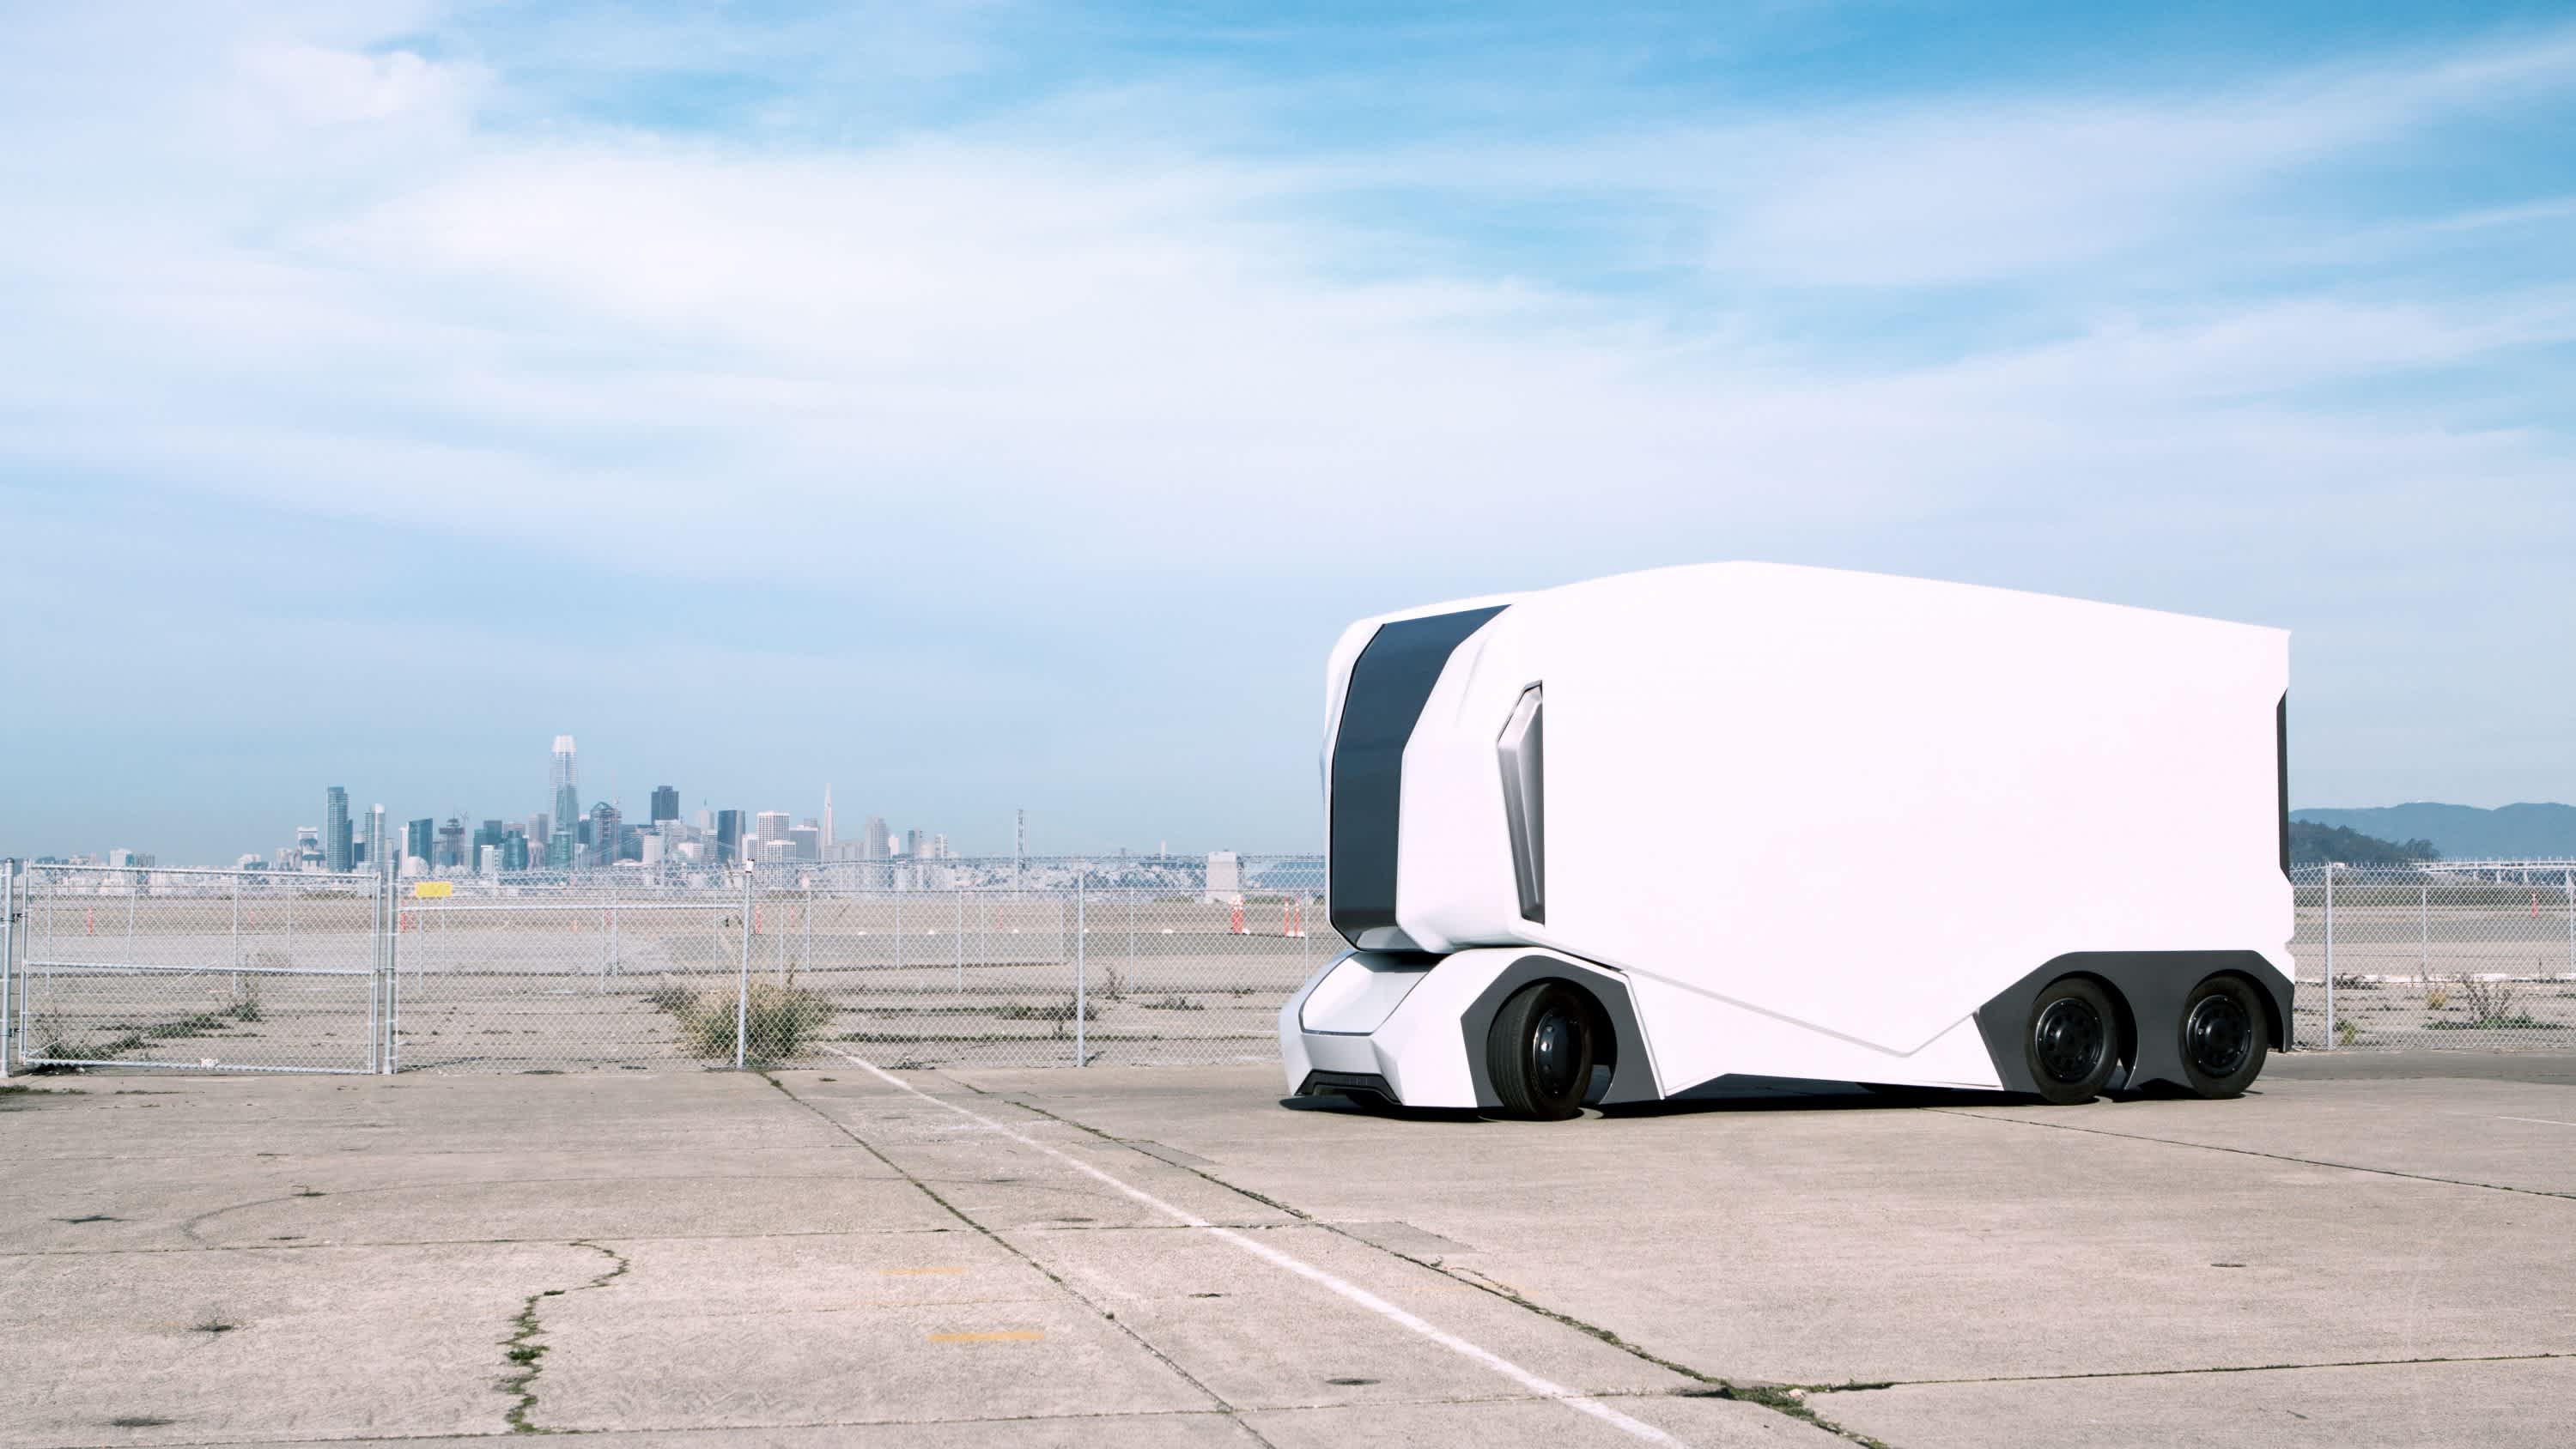 Einride raises $25 million series A to accelerate commercialization of its Autonomous, Electric Transport System